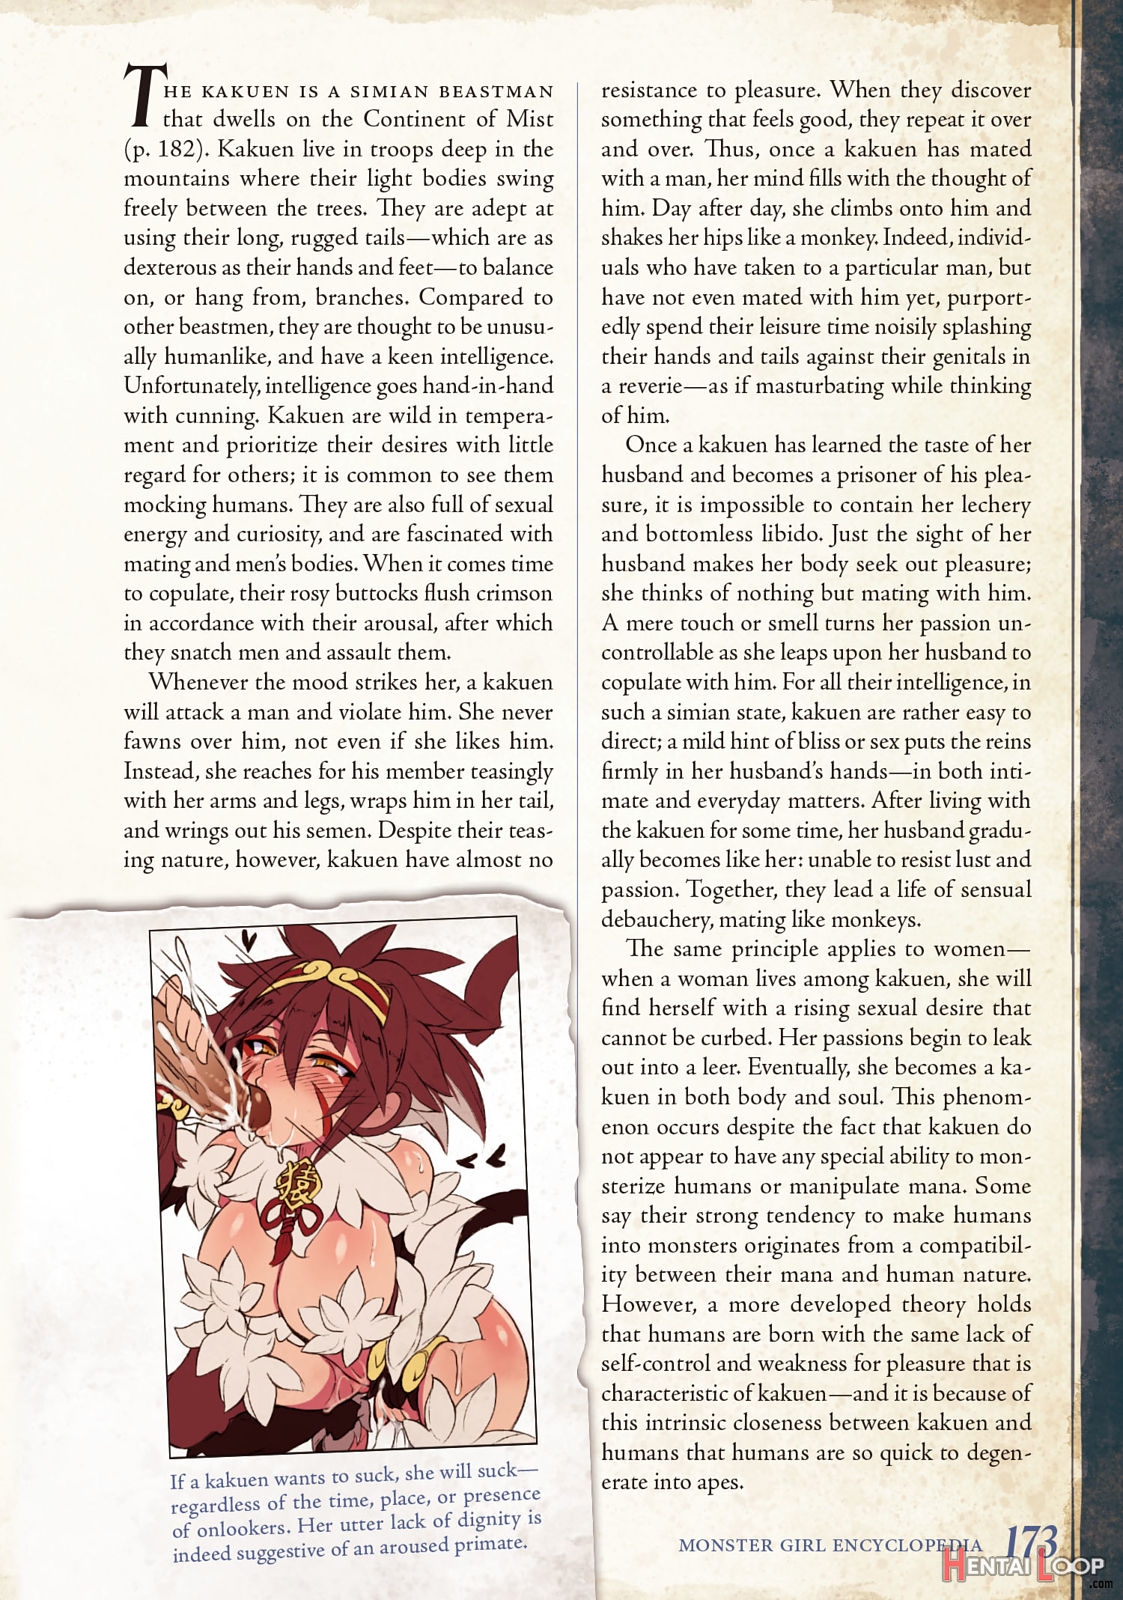 Monster Girl Encyclopedia Vol. 2 page 174